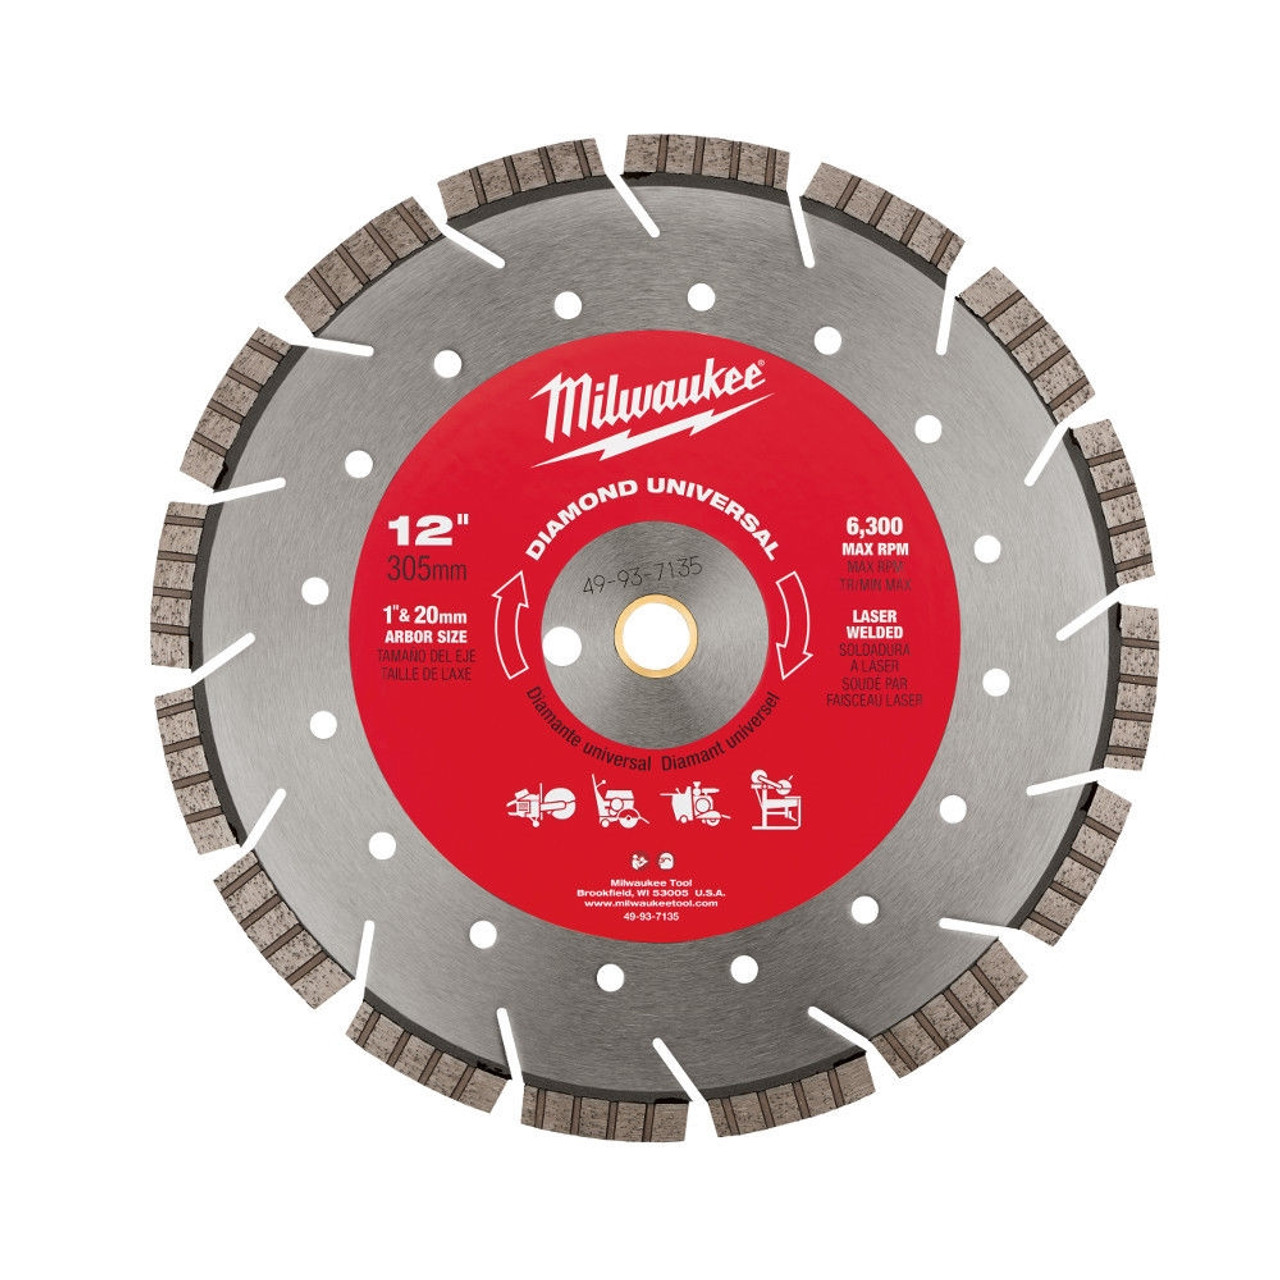 Milwaukee 49-93-7135 12 in Diamond Universal Segmented-Turbo Saw Blade